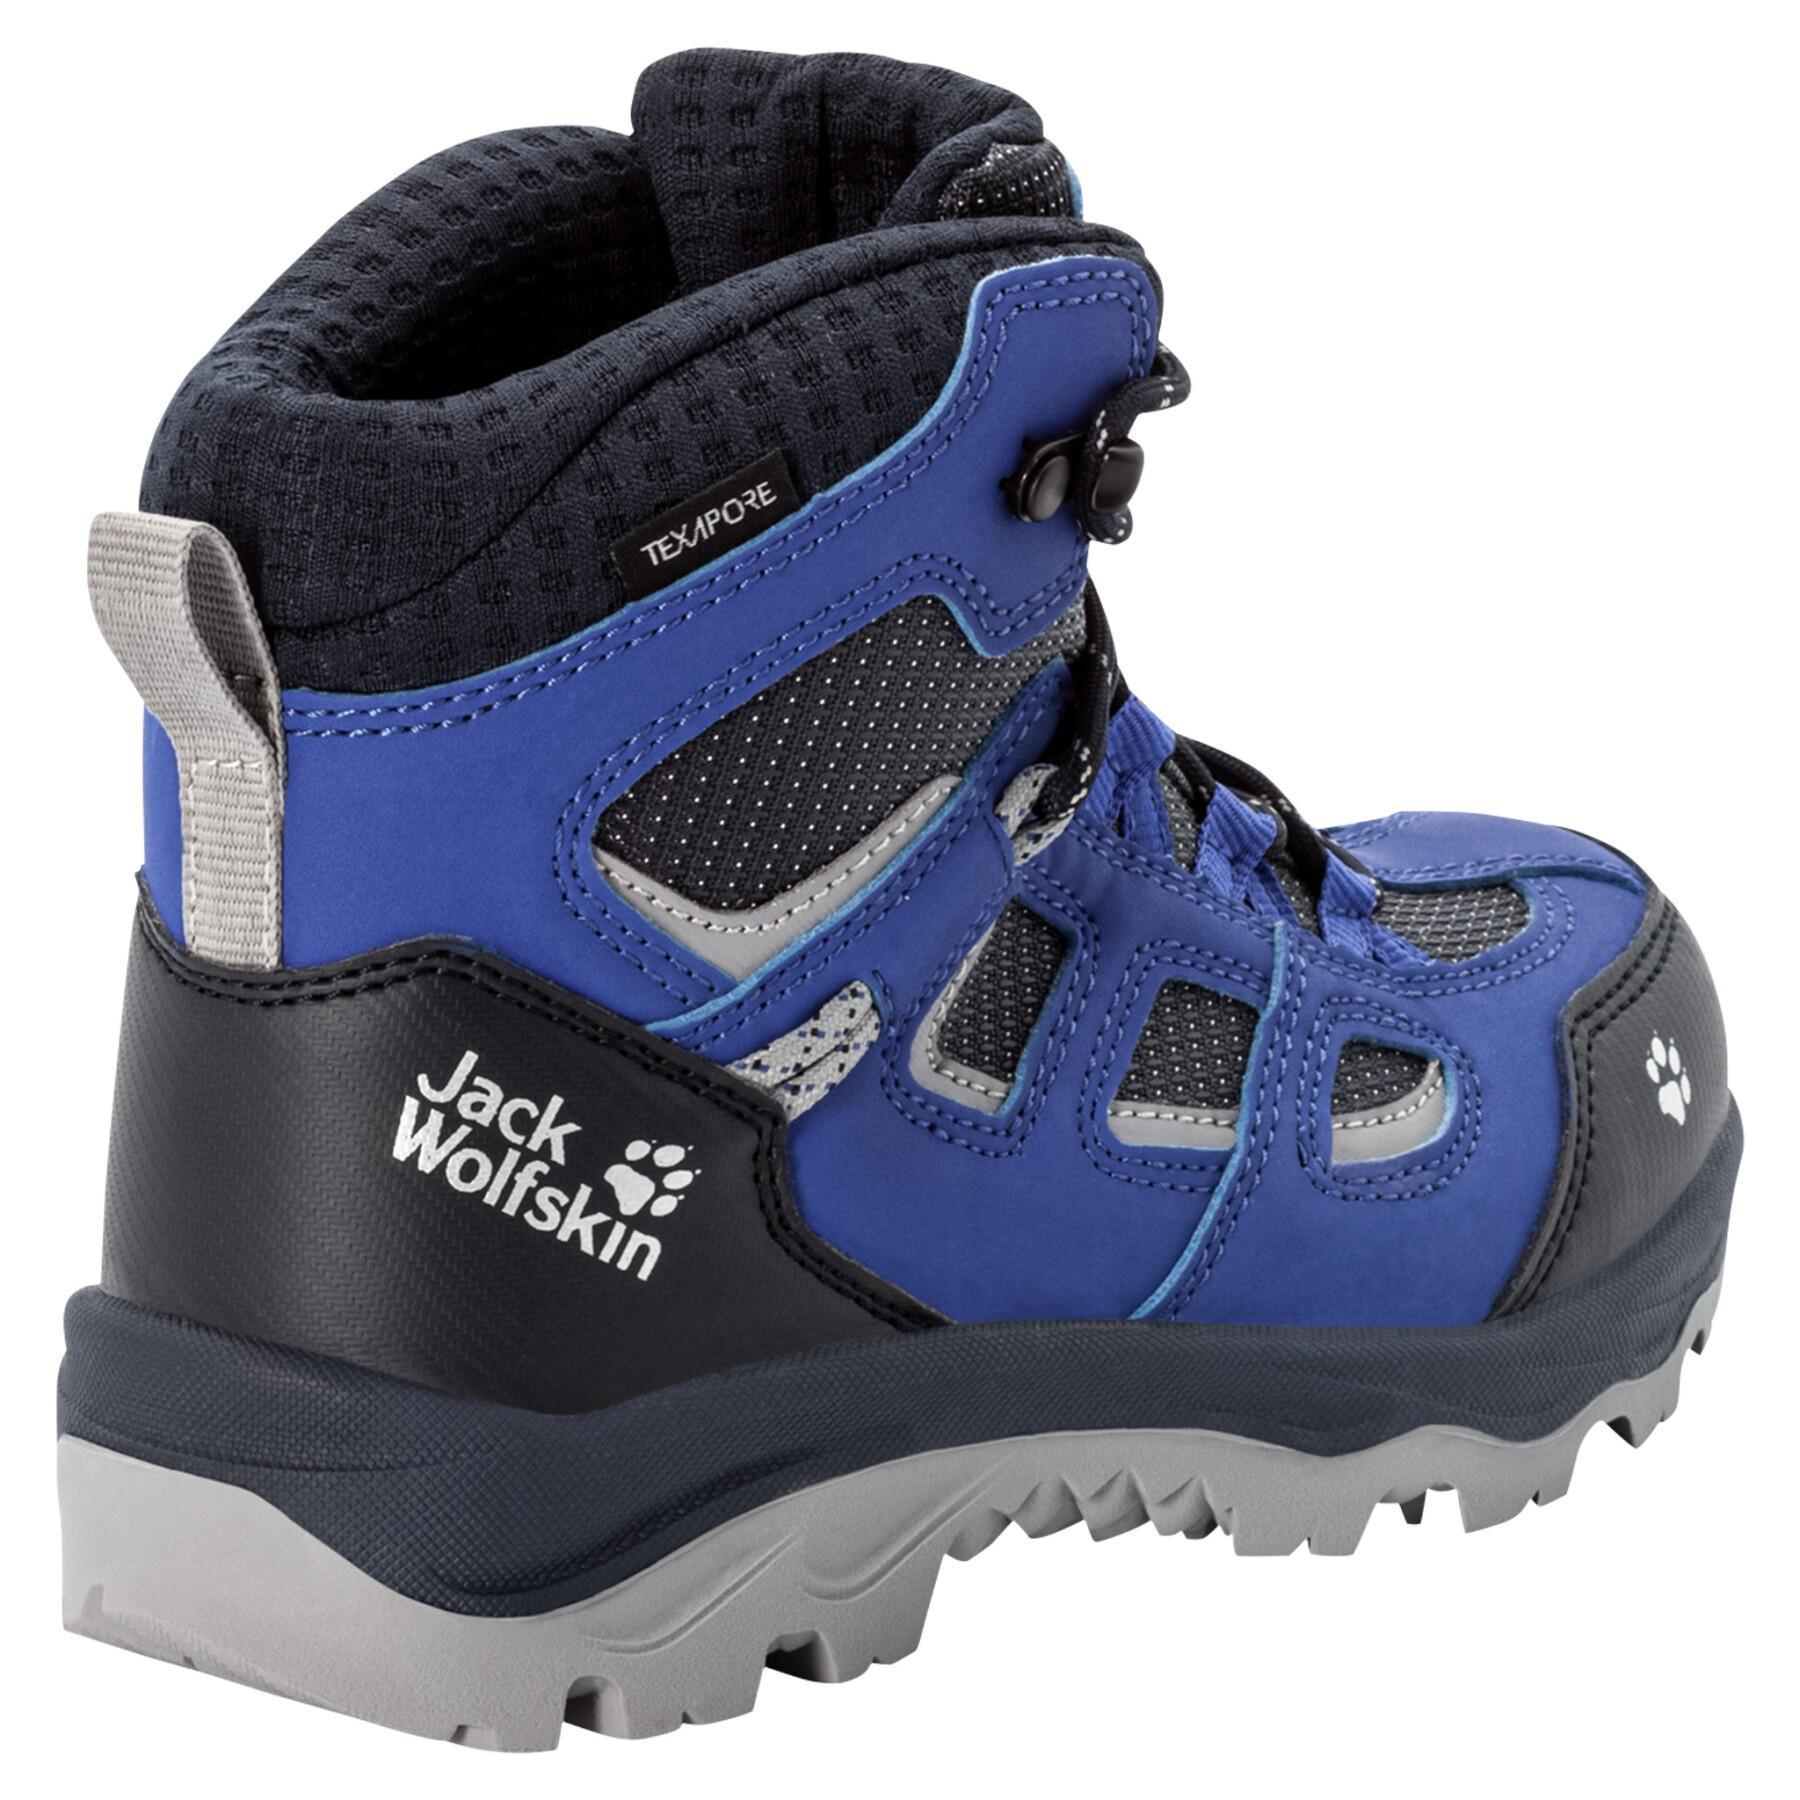 Children's hiking shoes Jack Wolfskin Vojo Texaporeid Mid